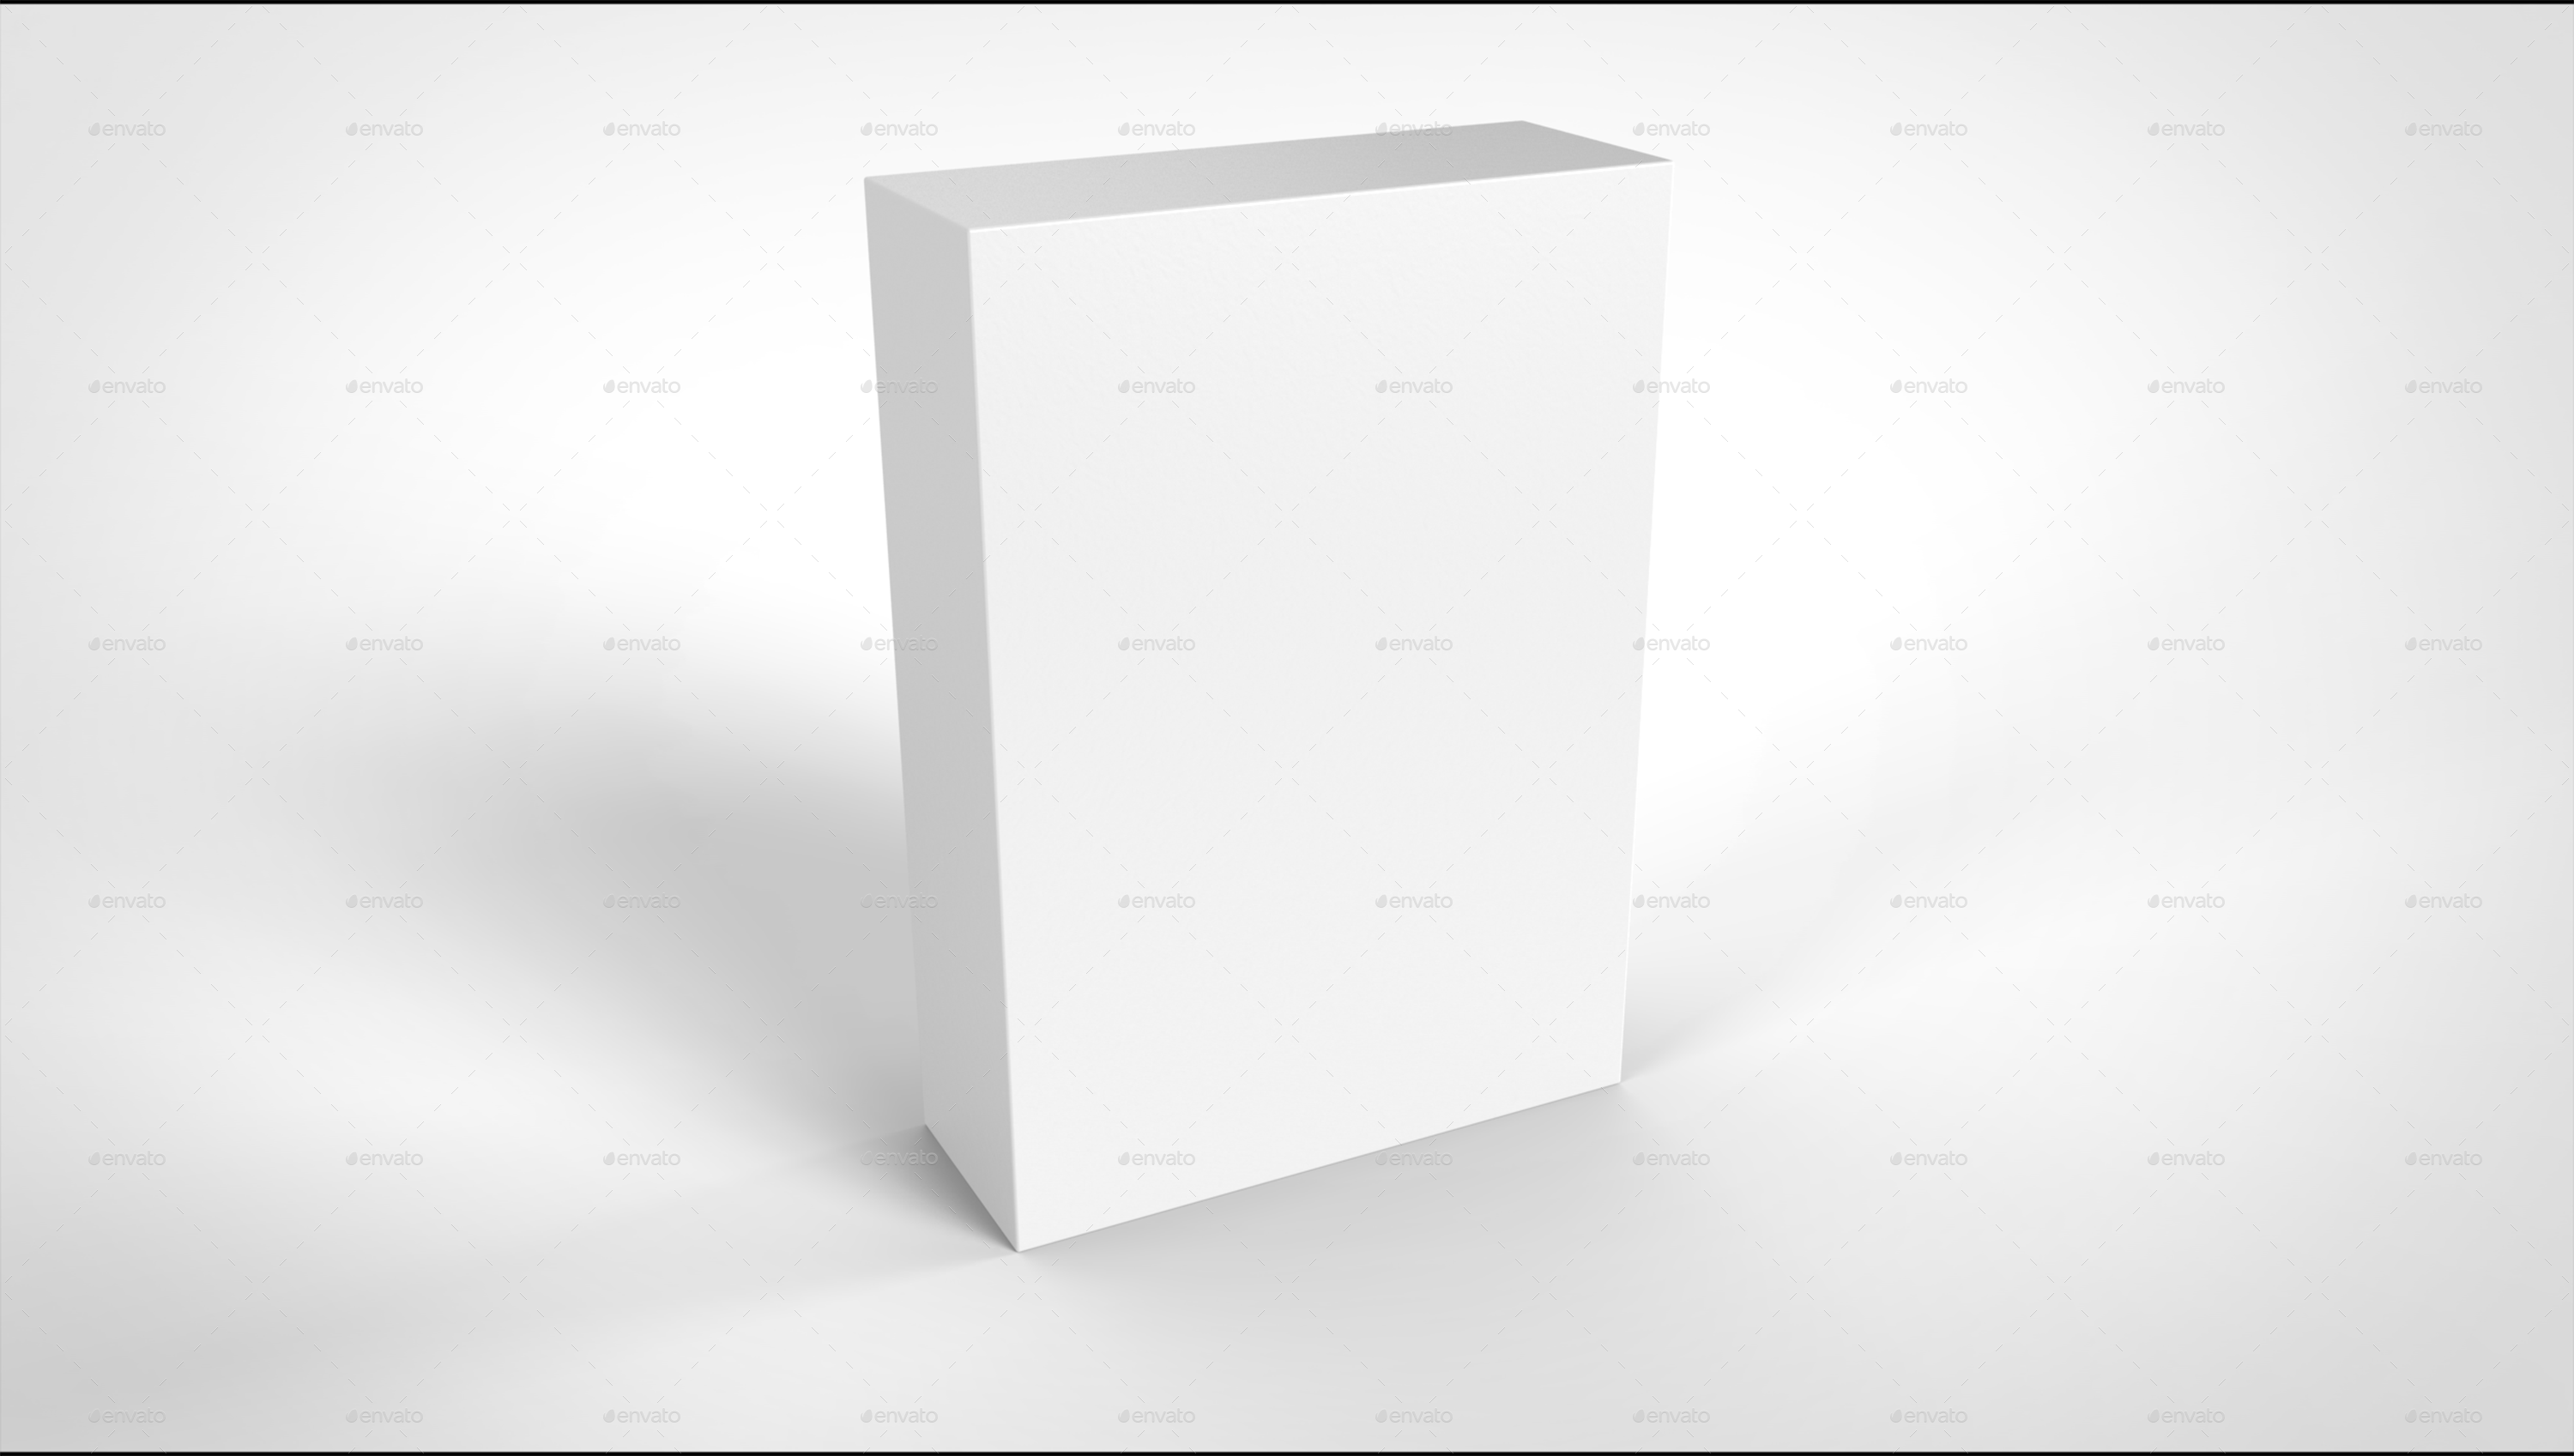 Download 3D Box Mock Up by jimmybdesign | GraphicRiver